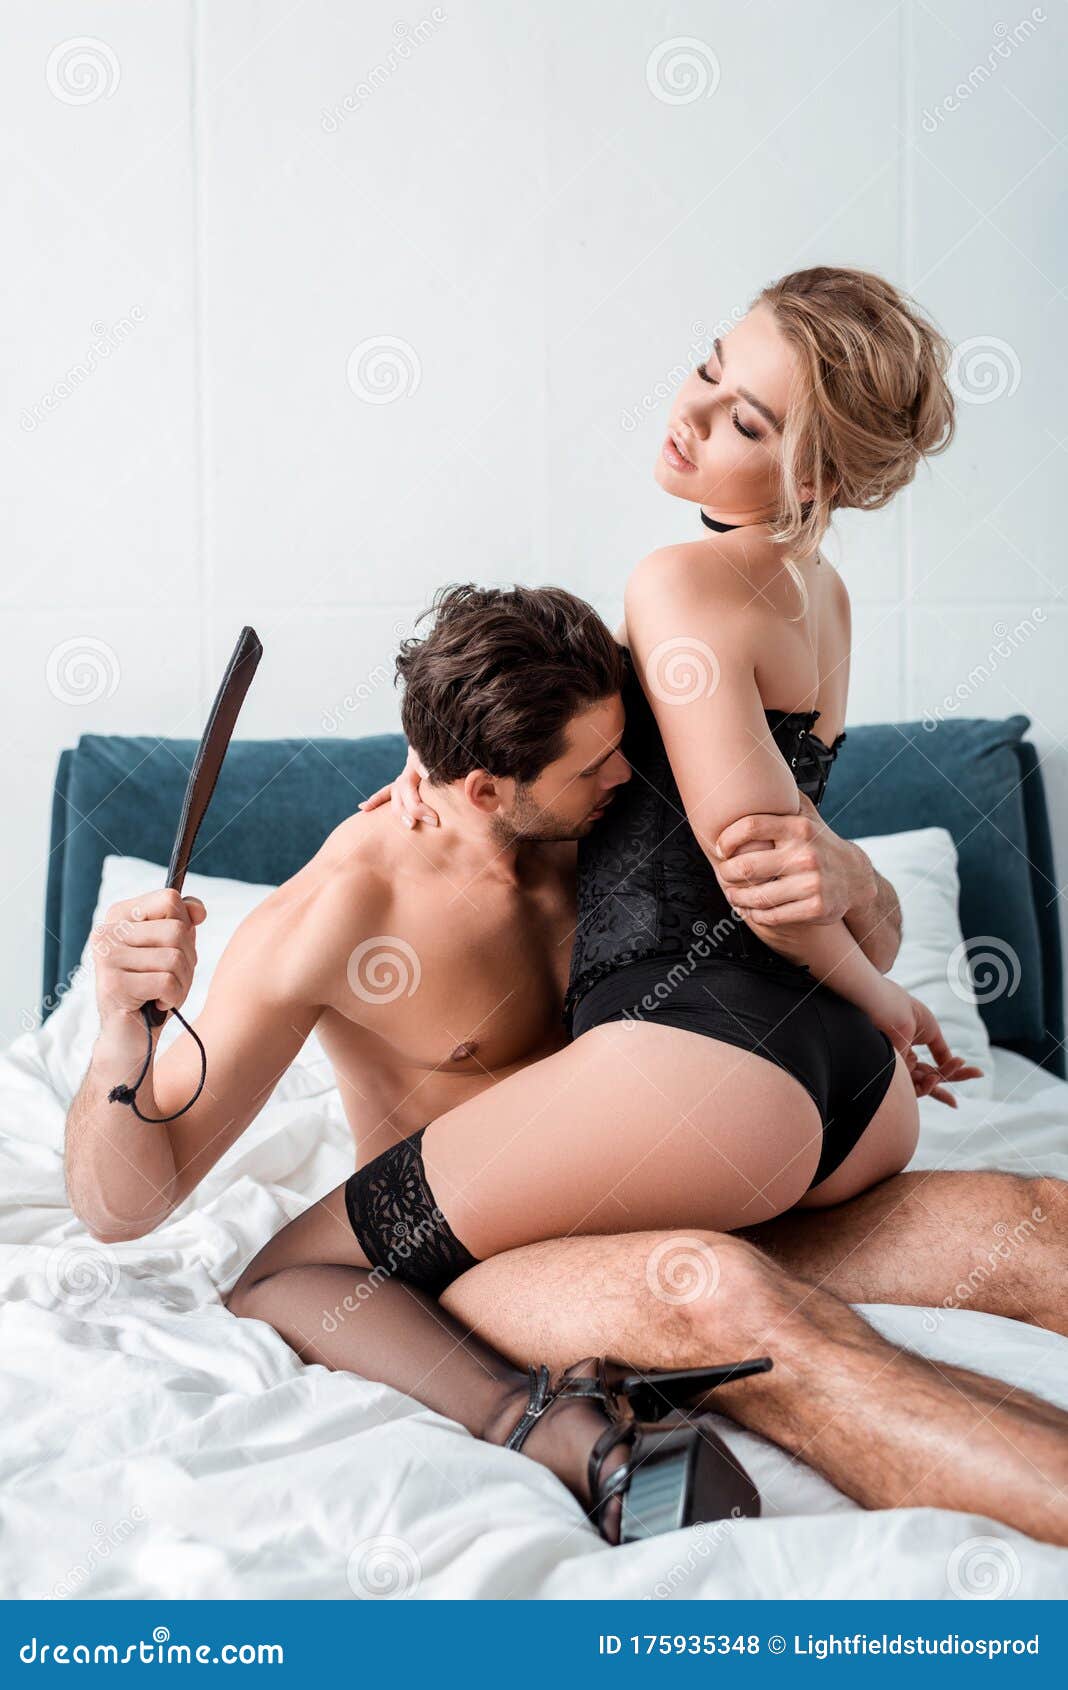 dimitri arvanitis recommends men on men spanking pic